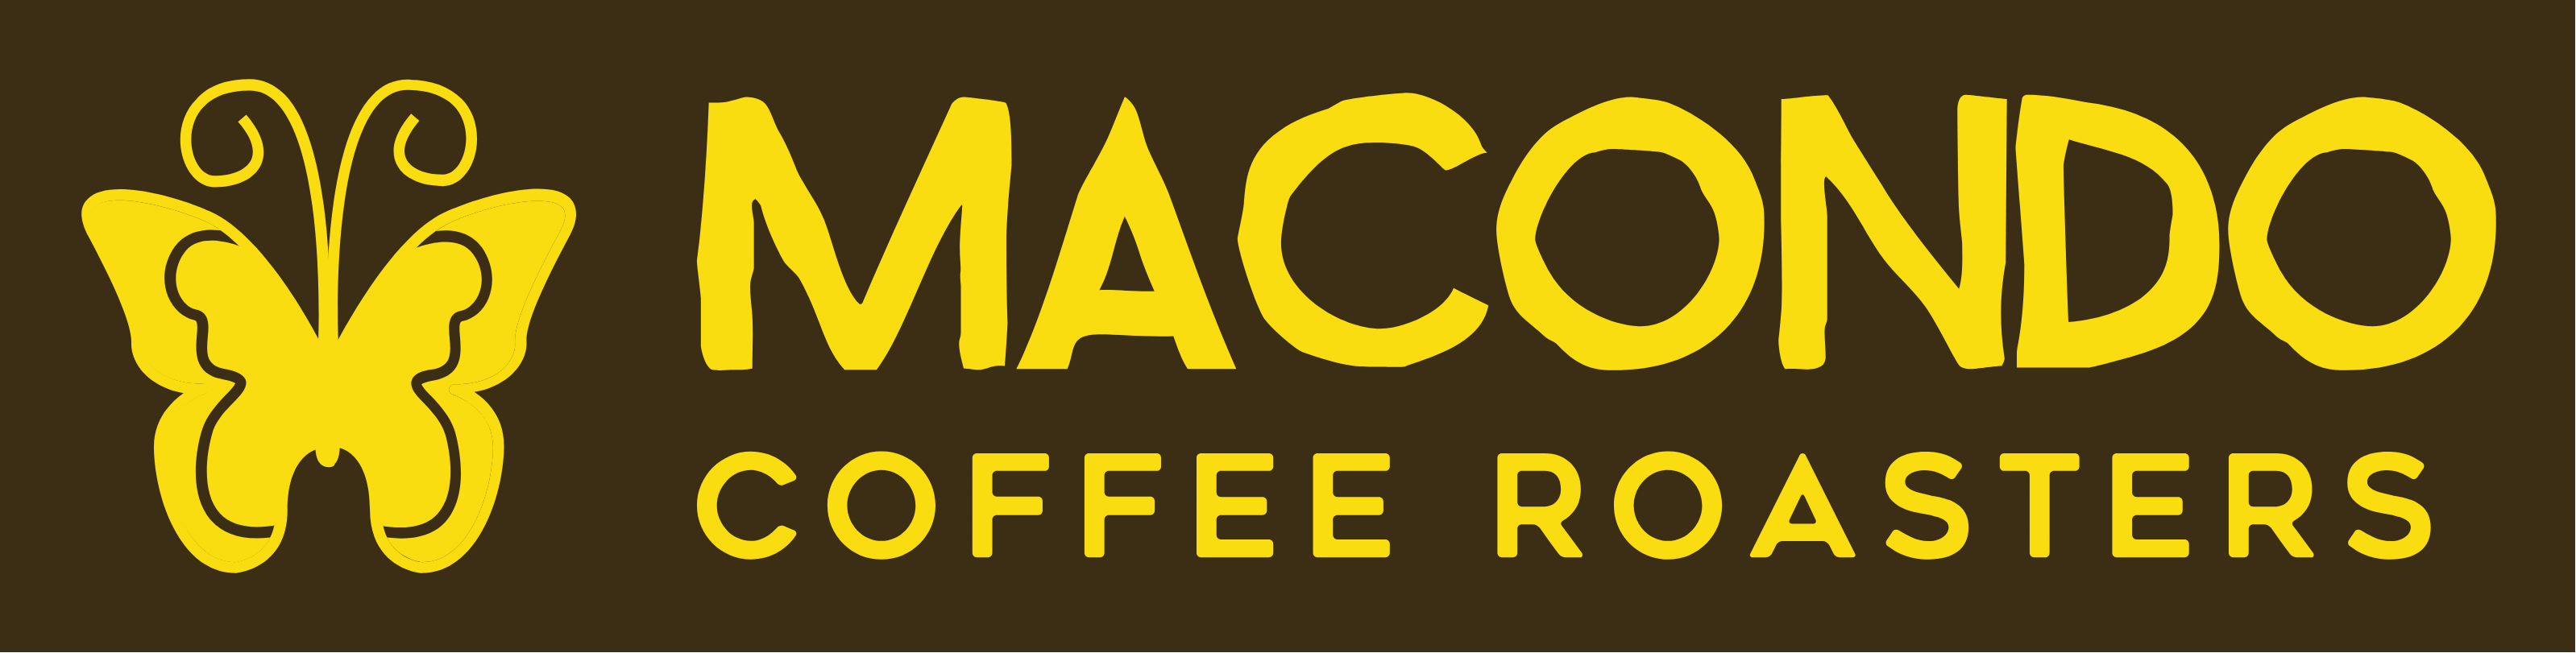 Macondo Coffee Roasters - Wesley Chapel